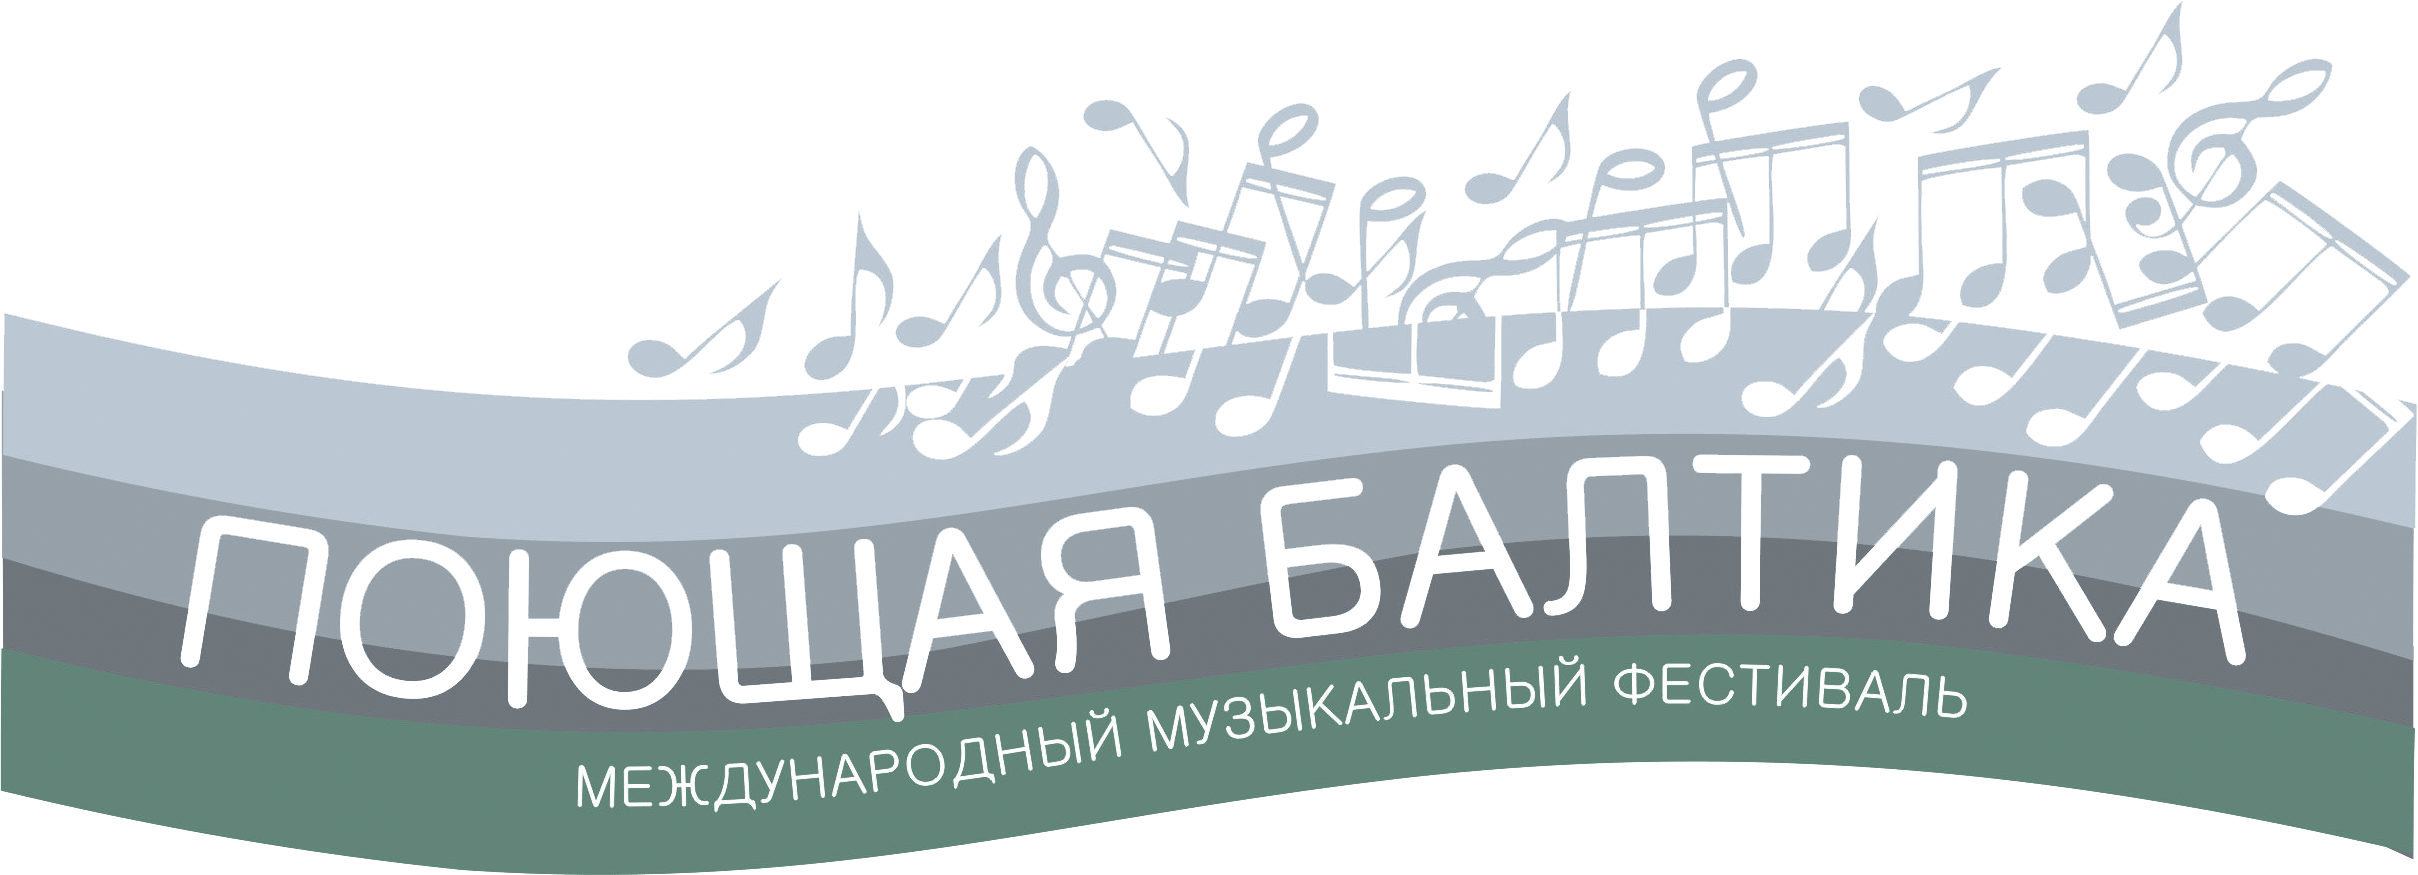 Logo Baltic Festival